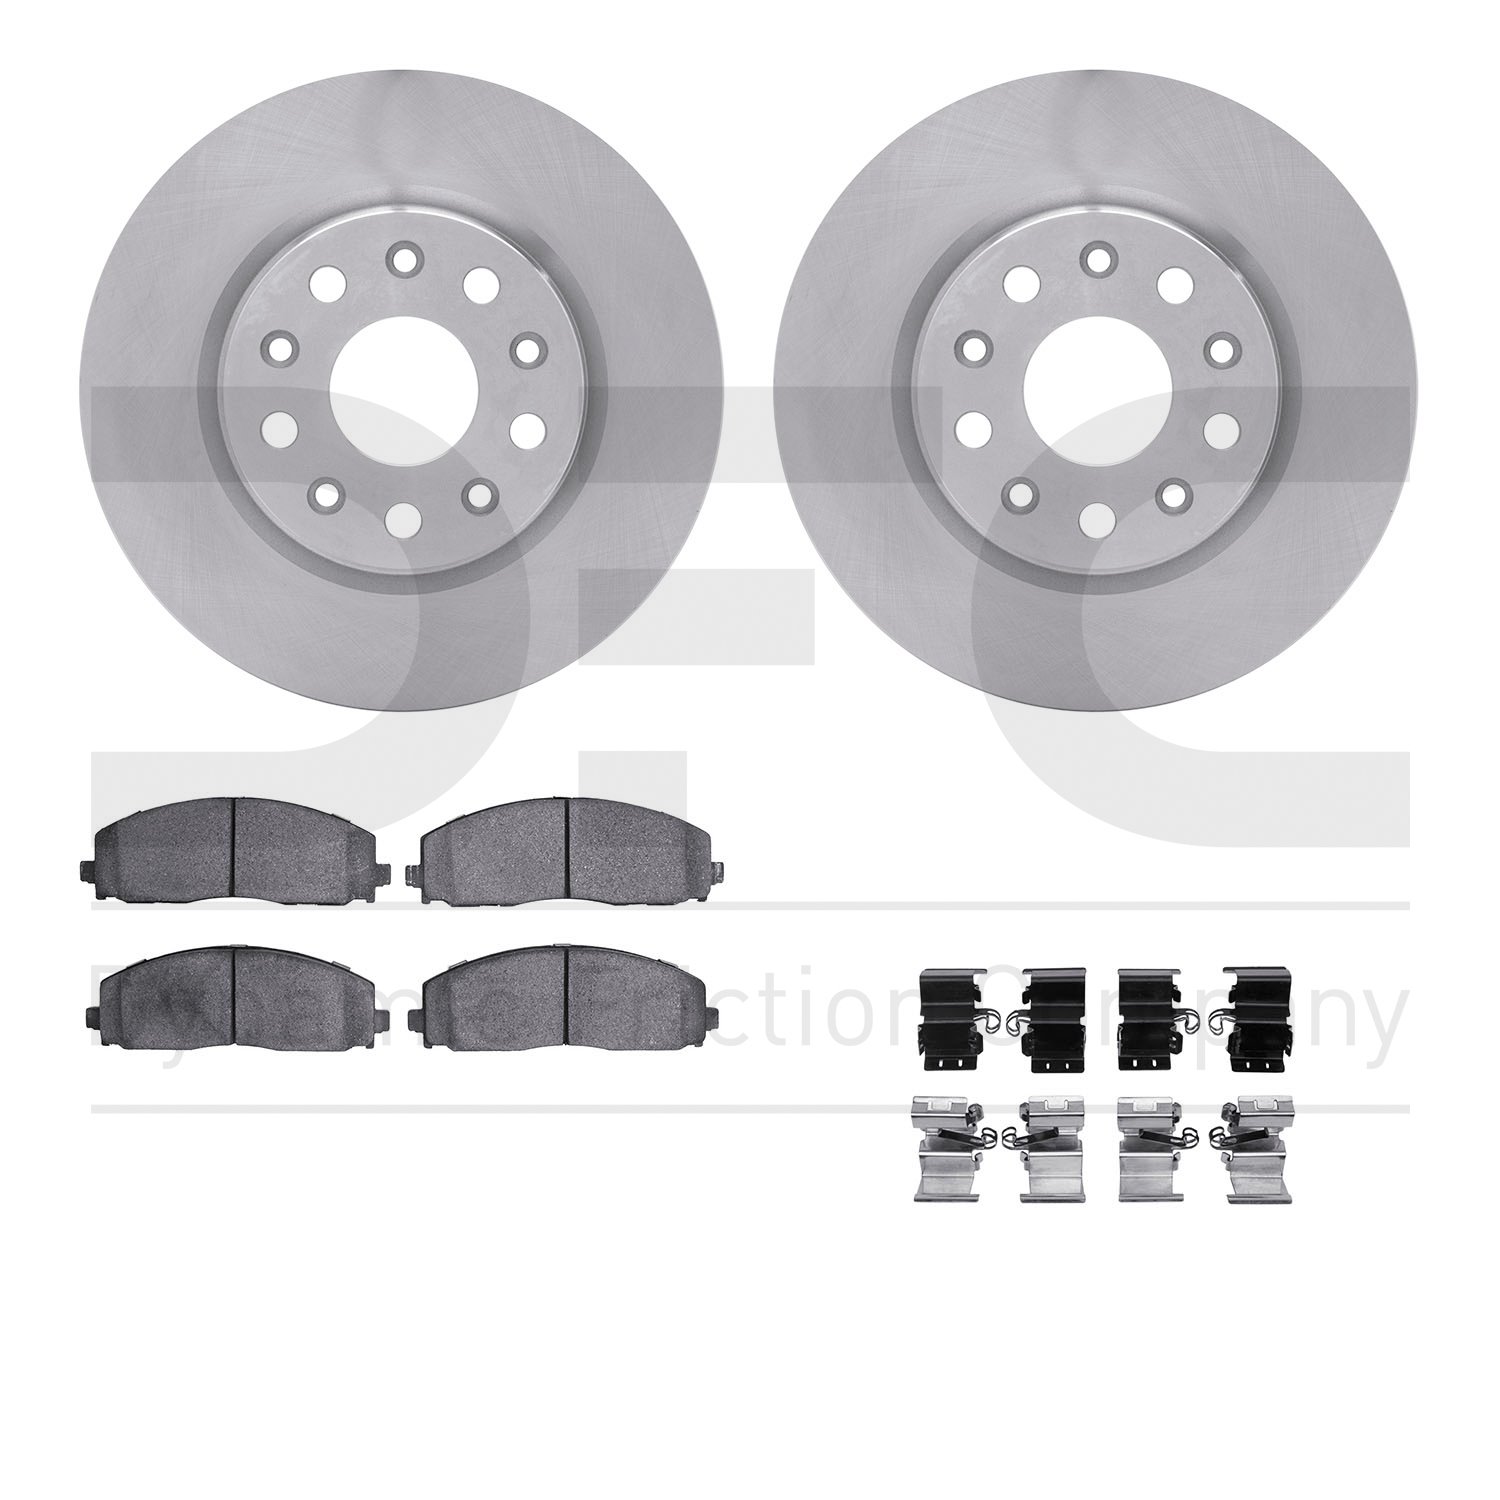 6412-42133 Brake Rotors with Ultimate-Duty Brake Pads Kit & Hardware, Fits Select Mopar, Position: Front